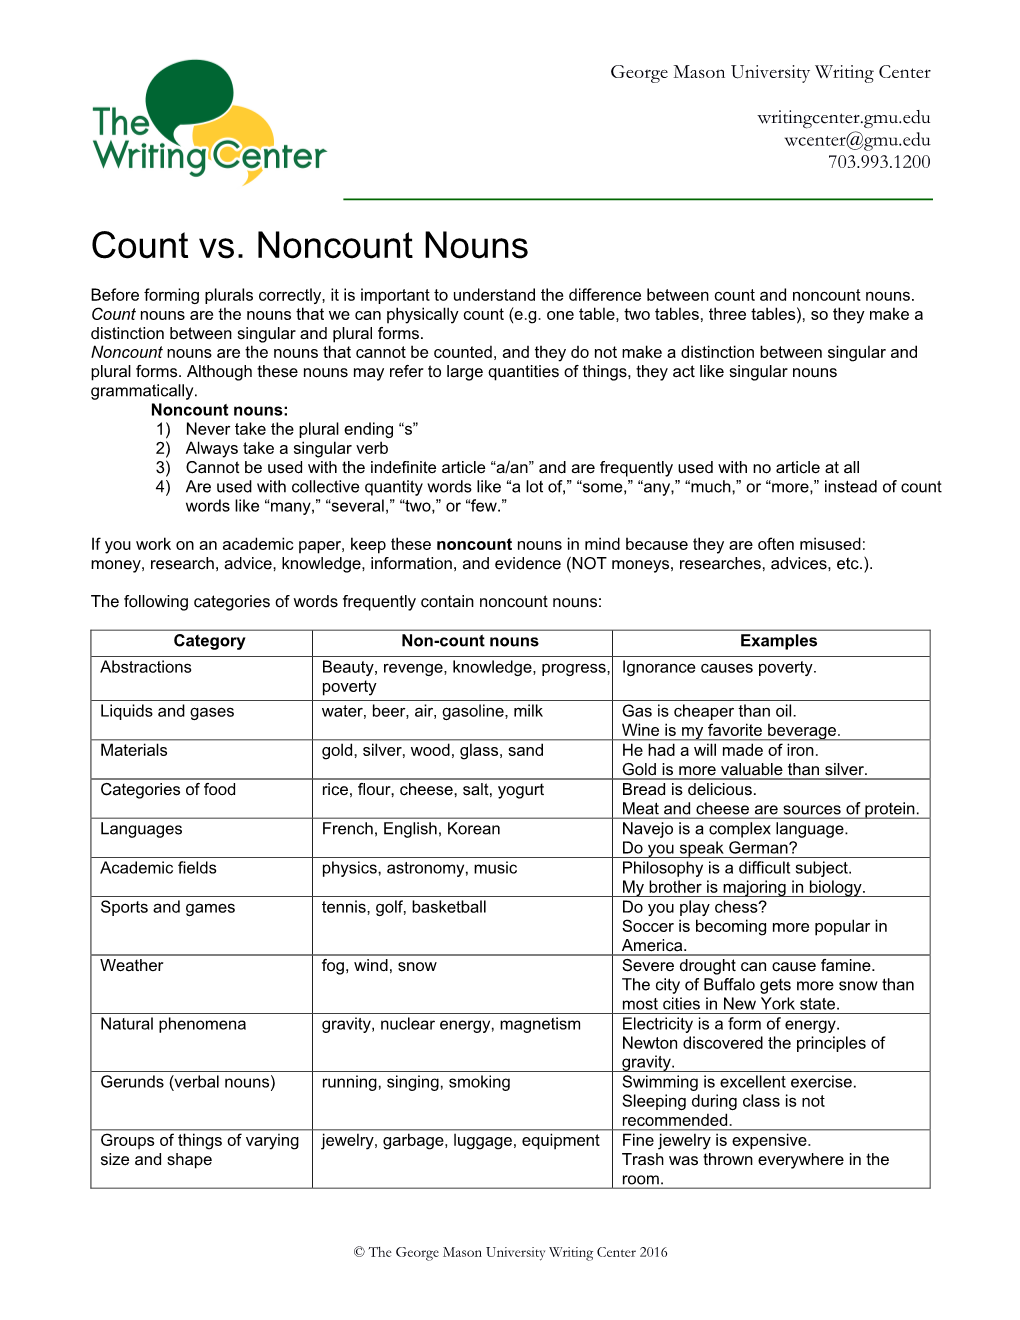 Count Vs Noncount Nouns